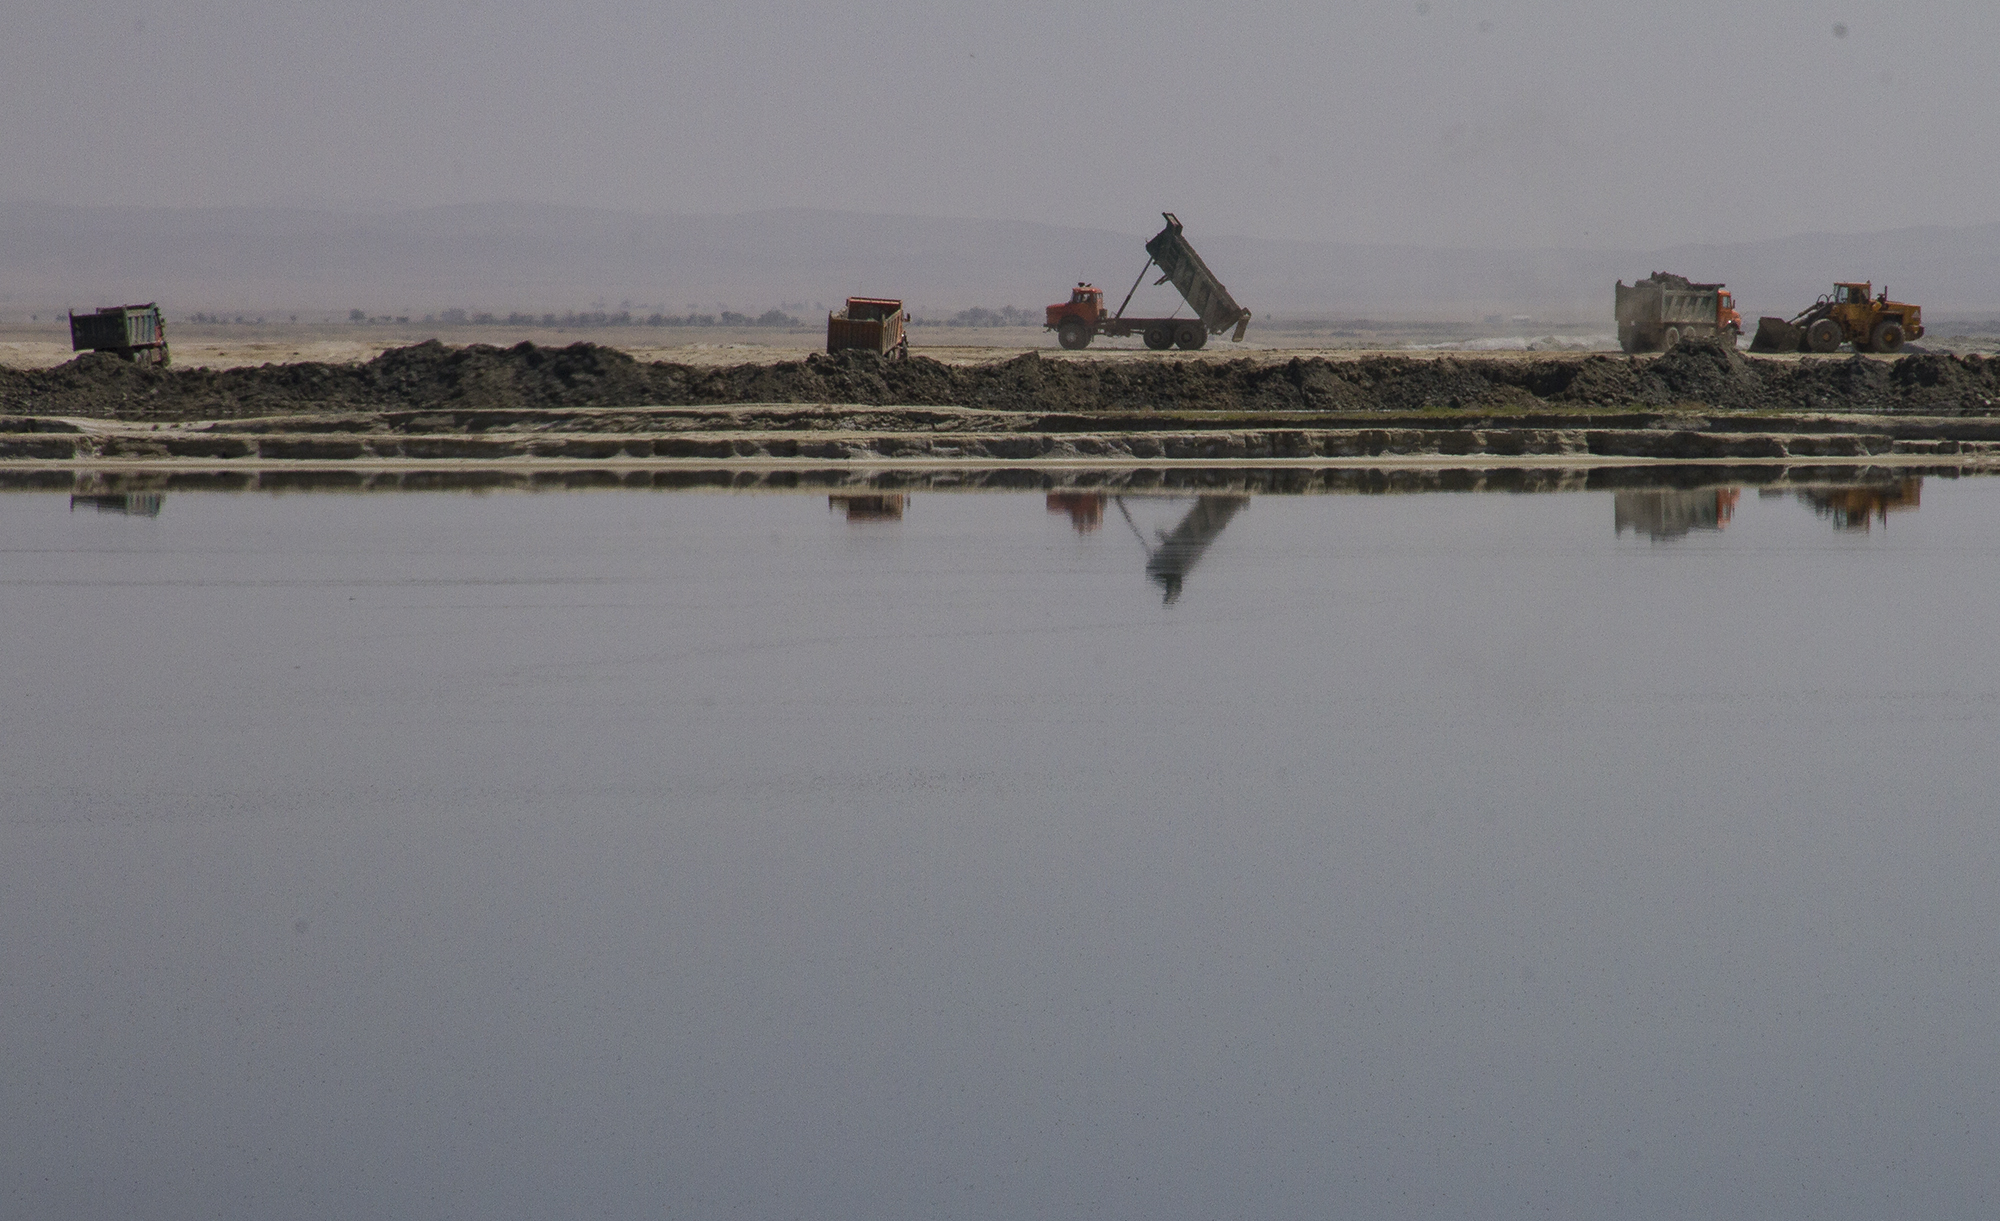 Far shore of lake with a distant excavator (photo: Qantara)